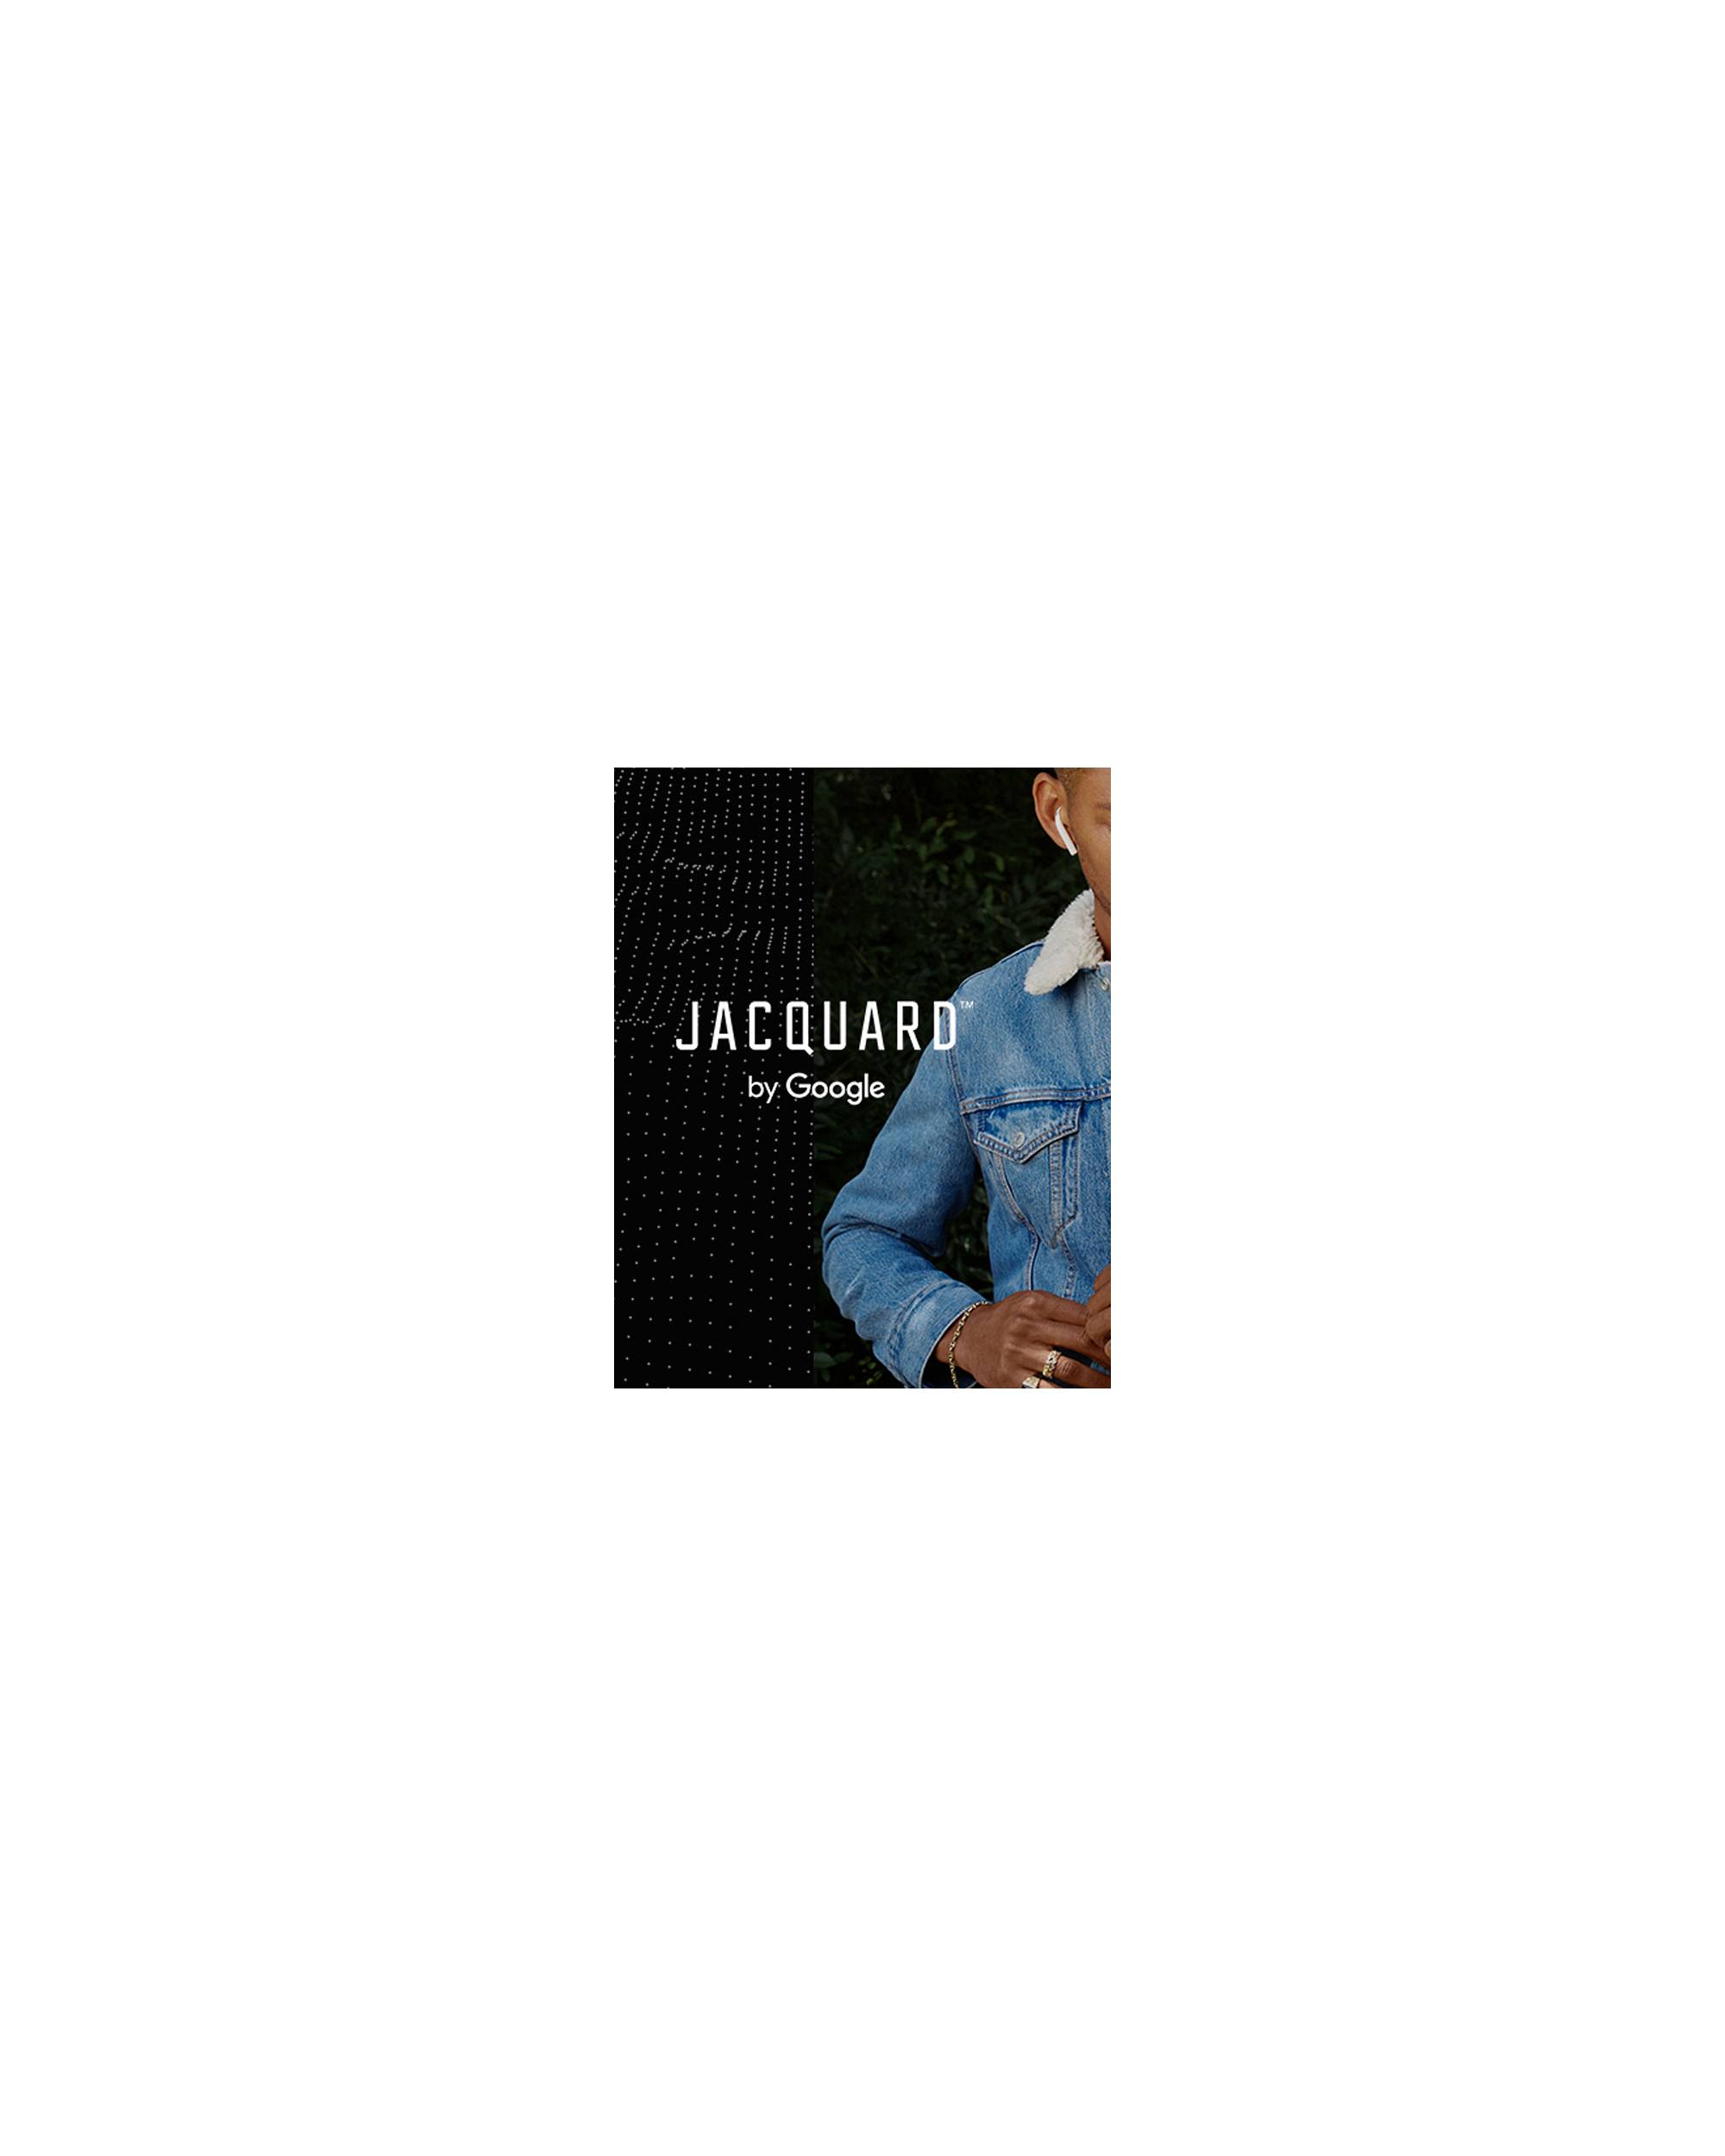 Jacquard- a new fashion trend for denim